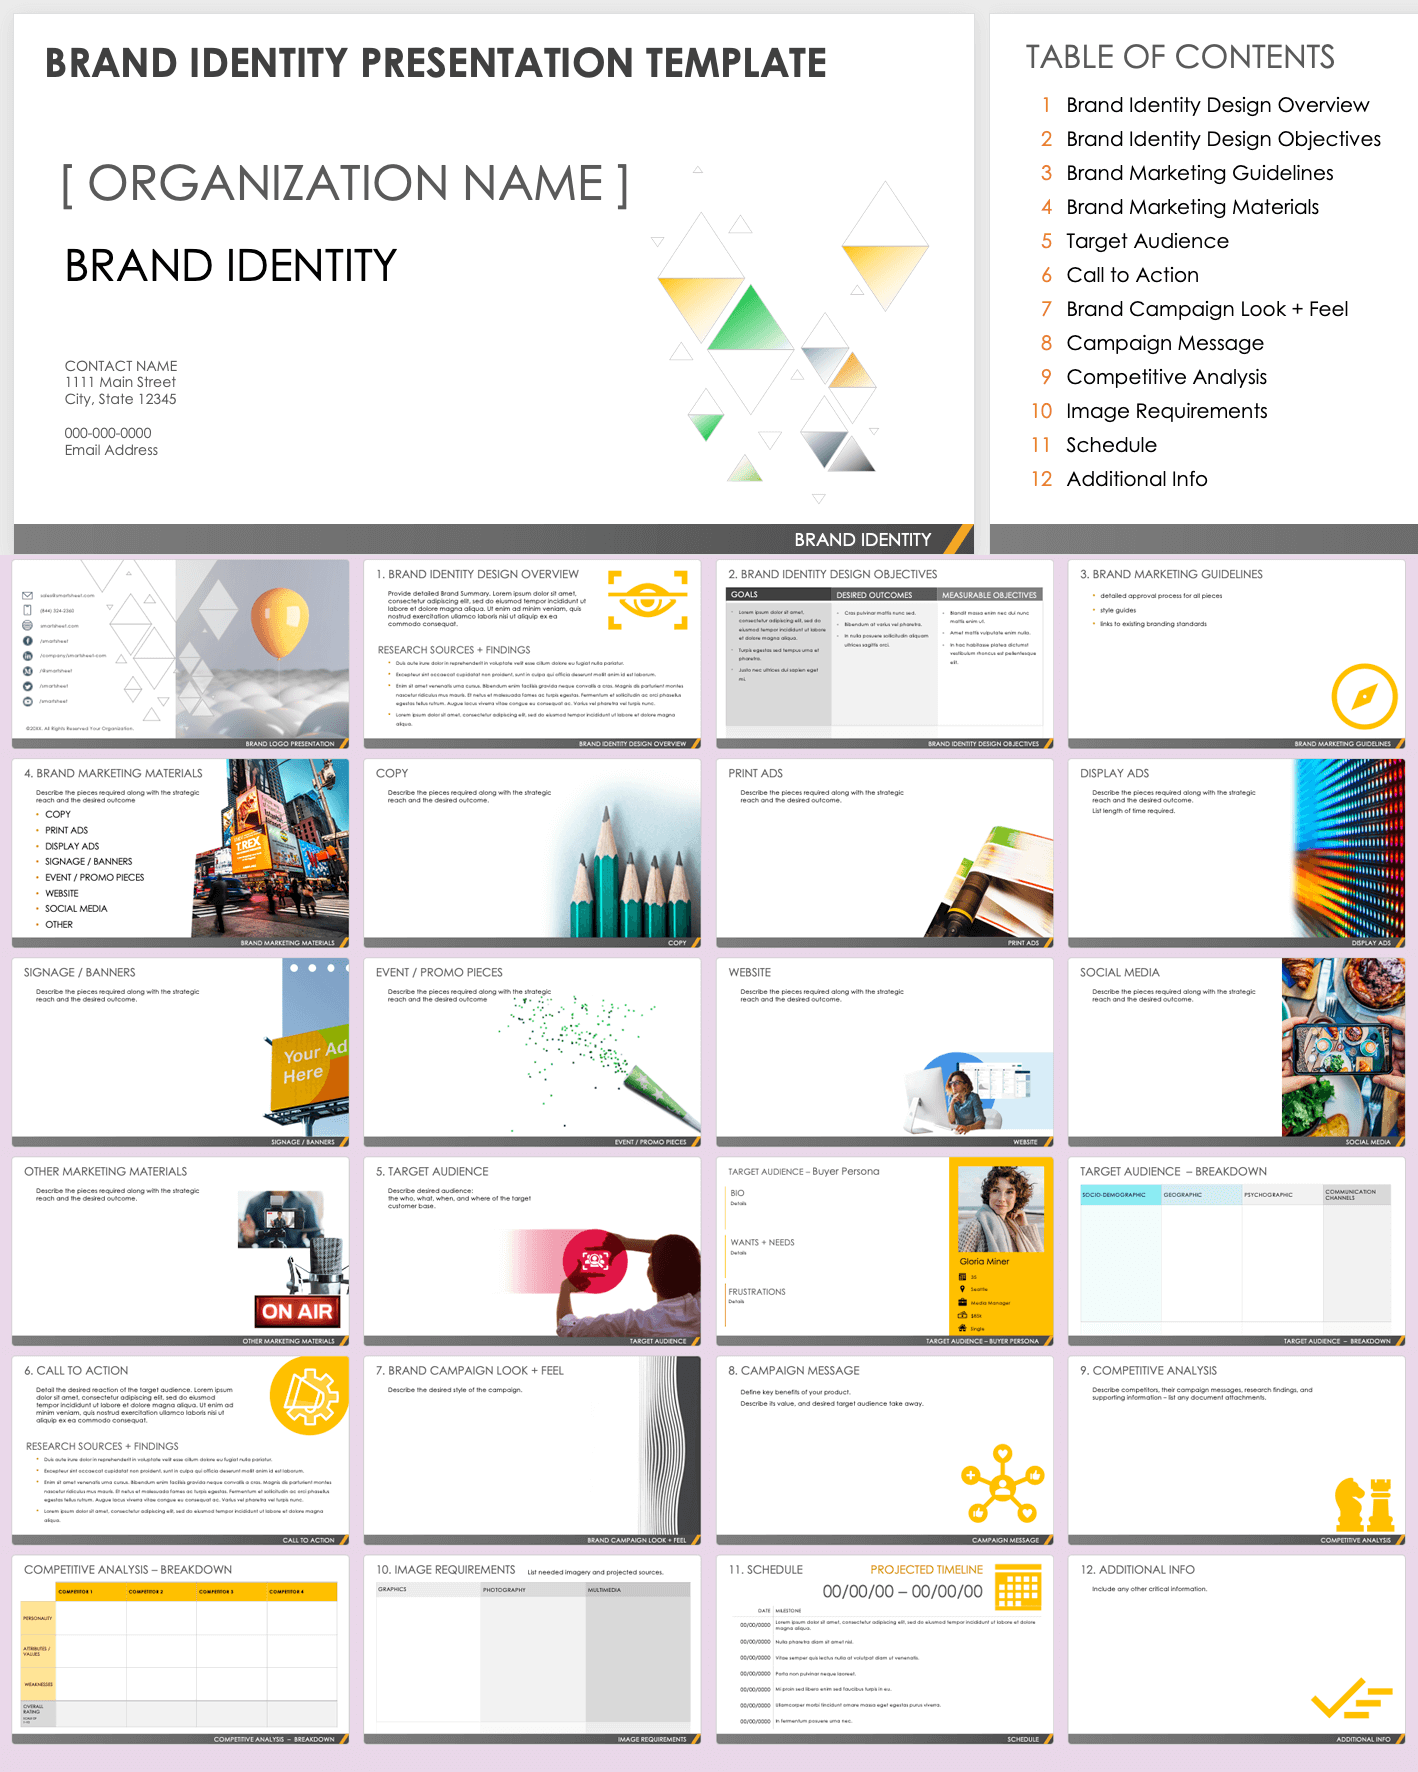 Brand identity presentation template